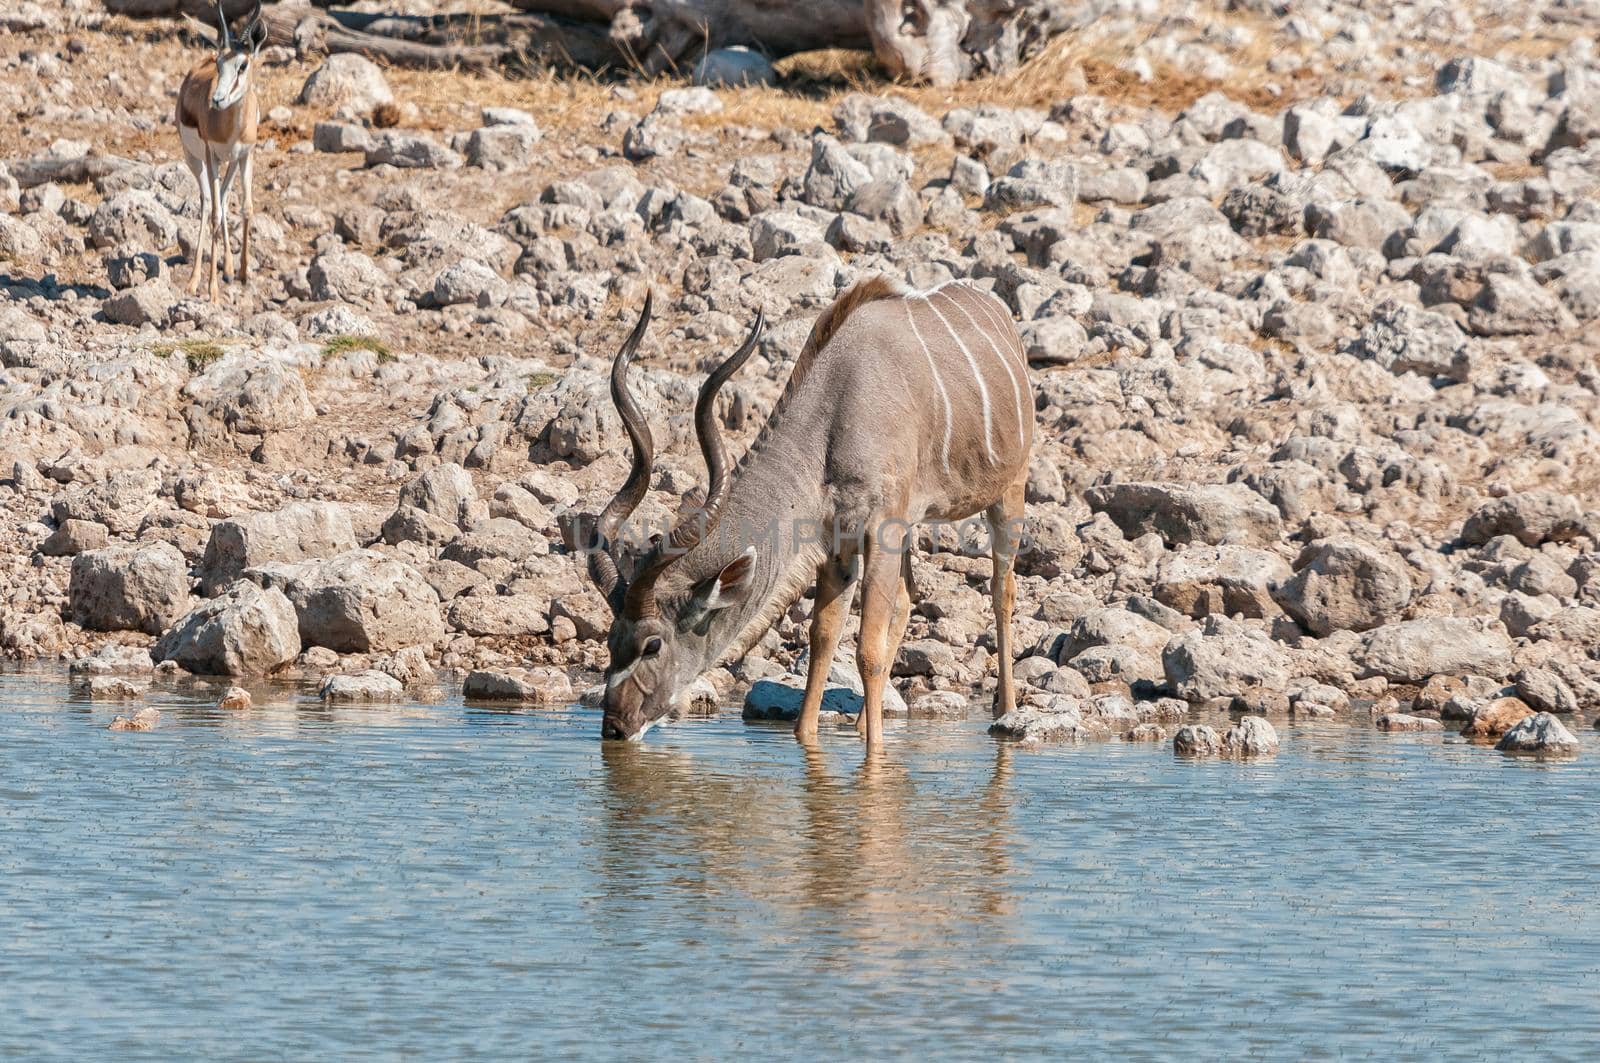 A male greater kudu, Tragelaphus strepsiceros, drinking water